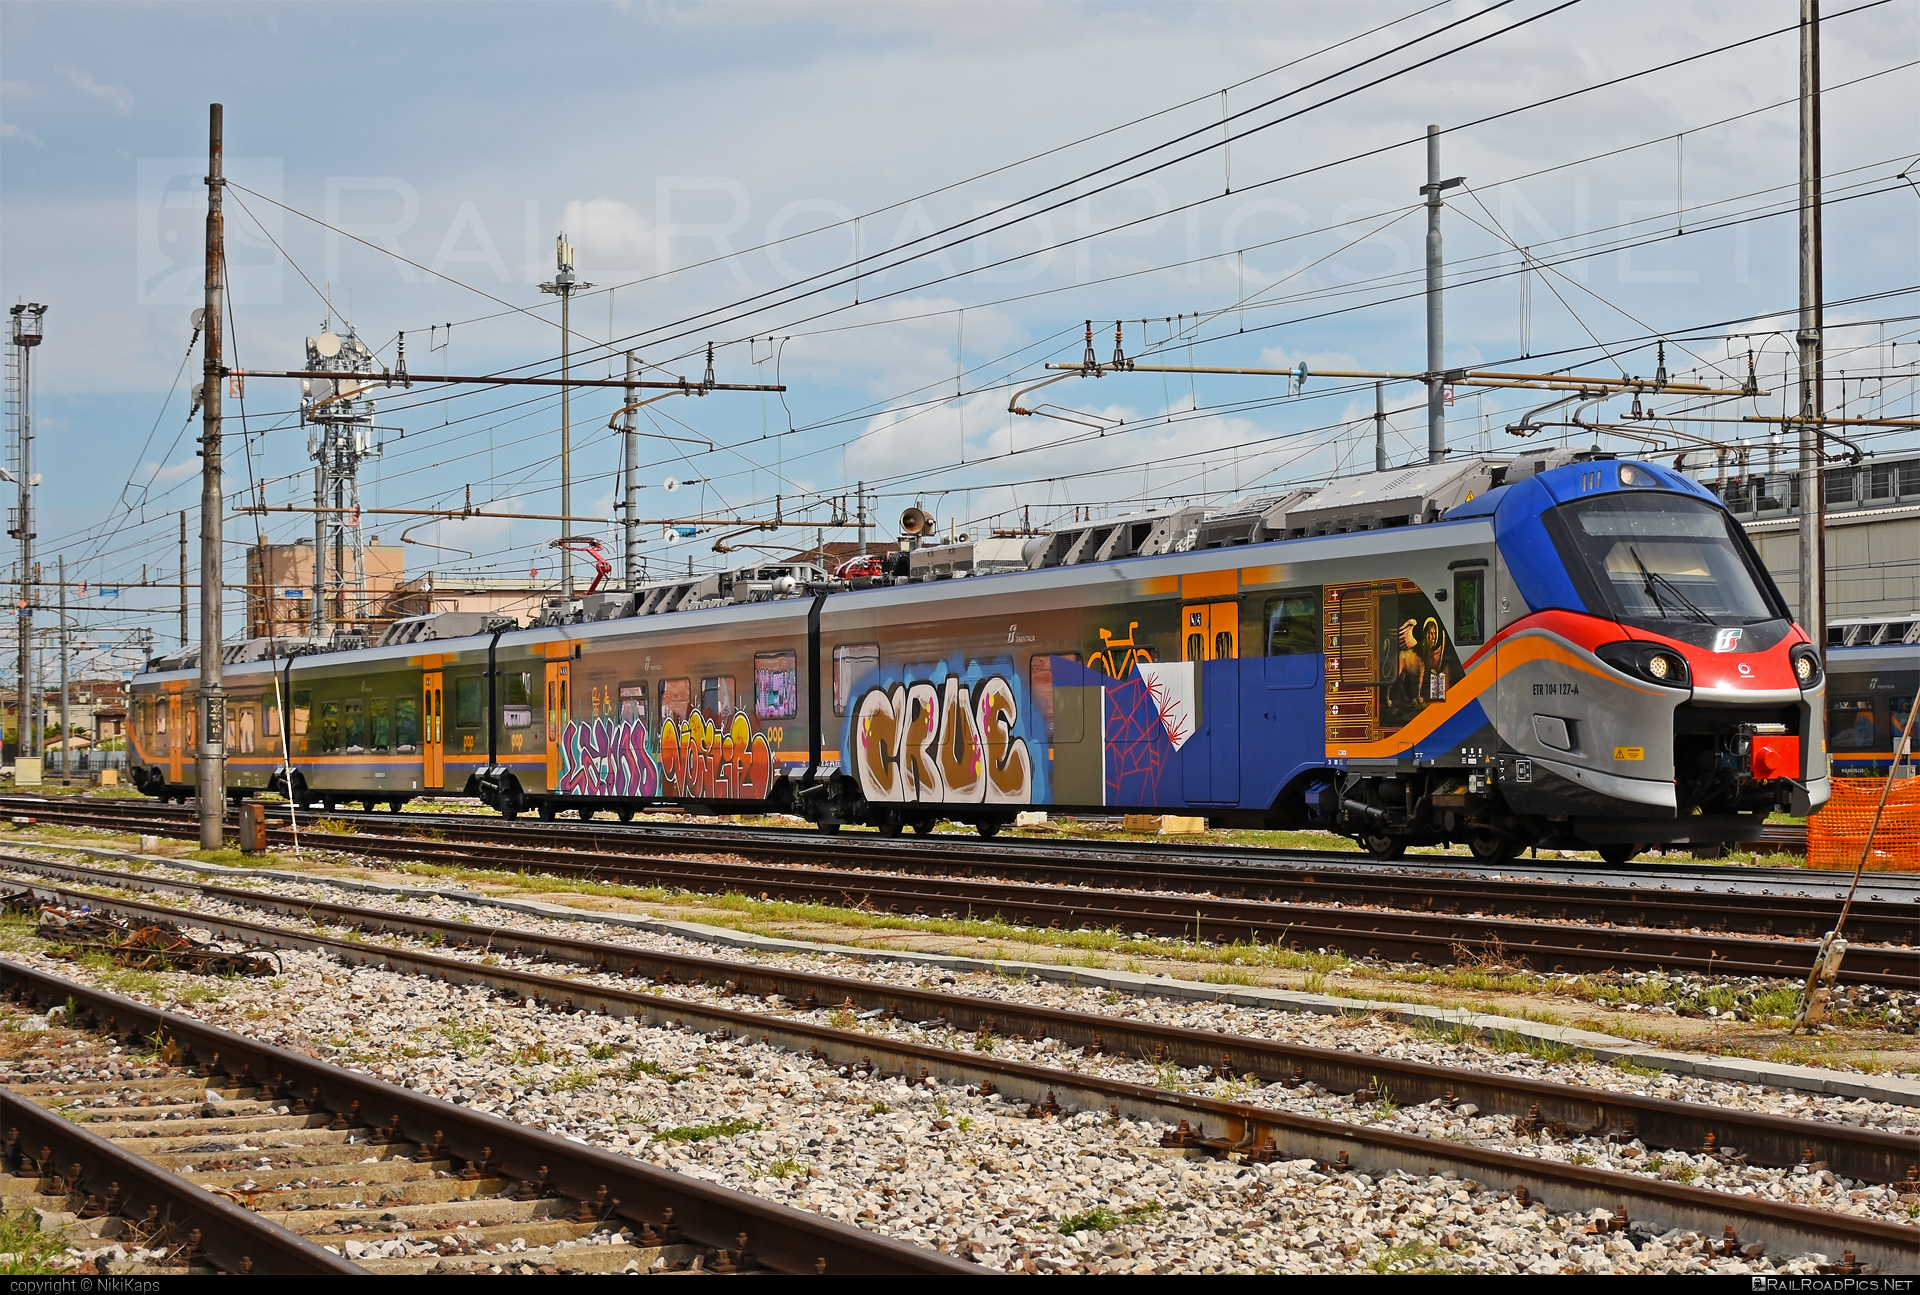 Alstom Coradia Stream ”Pop” - ETR 104 127-A operated by Trenitalia S.p.A. #alstom #alstomCoradia #coradia #coradiaStream #coradiaStreamPop #ferroviedellostato #fs #fsitaliane #graffiti #pop #trenitalia #trenitaliaspa